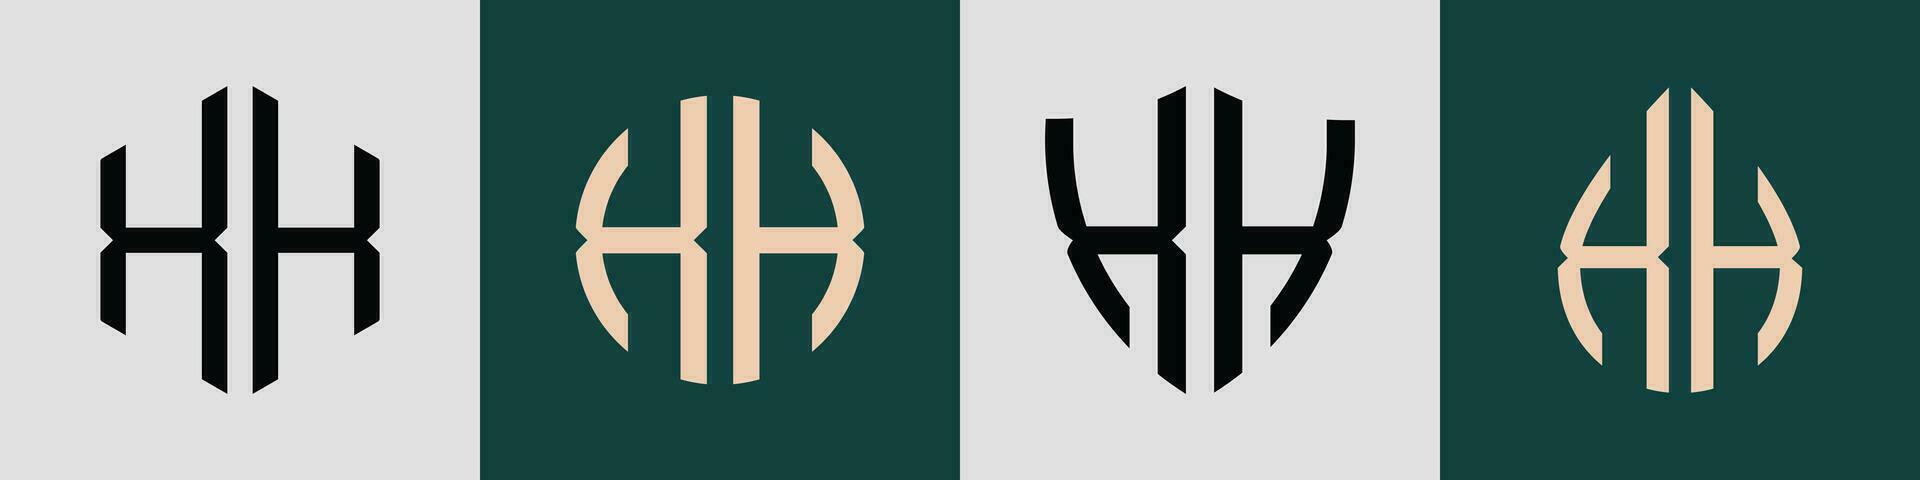 creativo sencillo inicial letras xk logo diseños manojo. vector